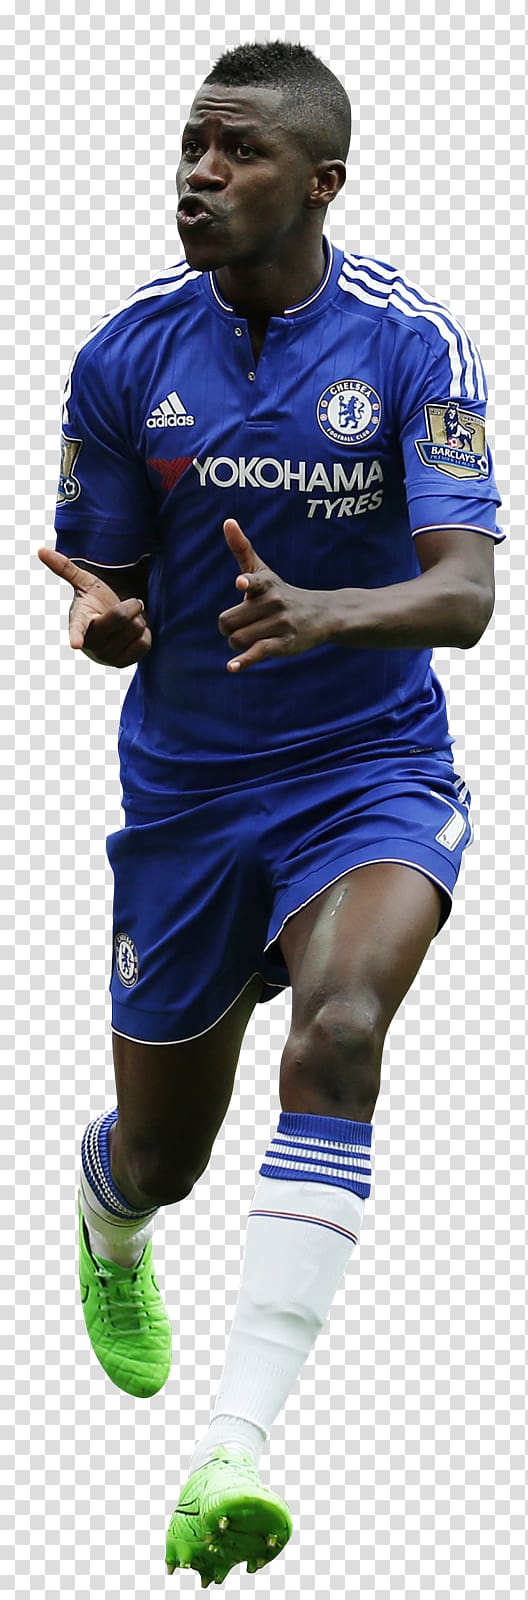 Jersey Chelsea Blue Chelsea F.C. Team sport Adidas, Coutinho brazil transparent background PNG clipart